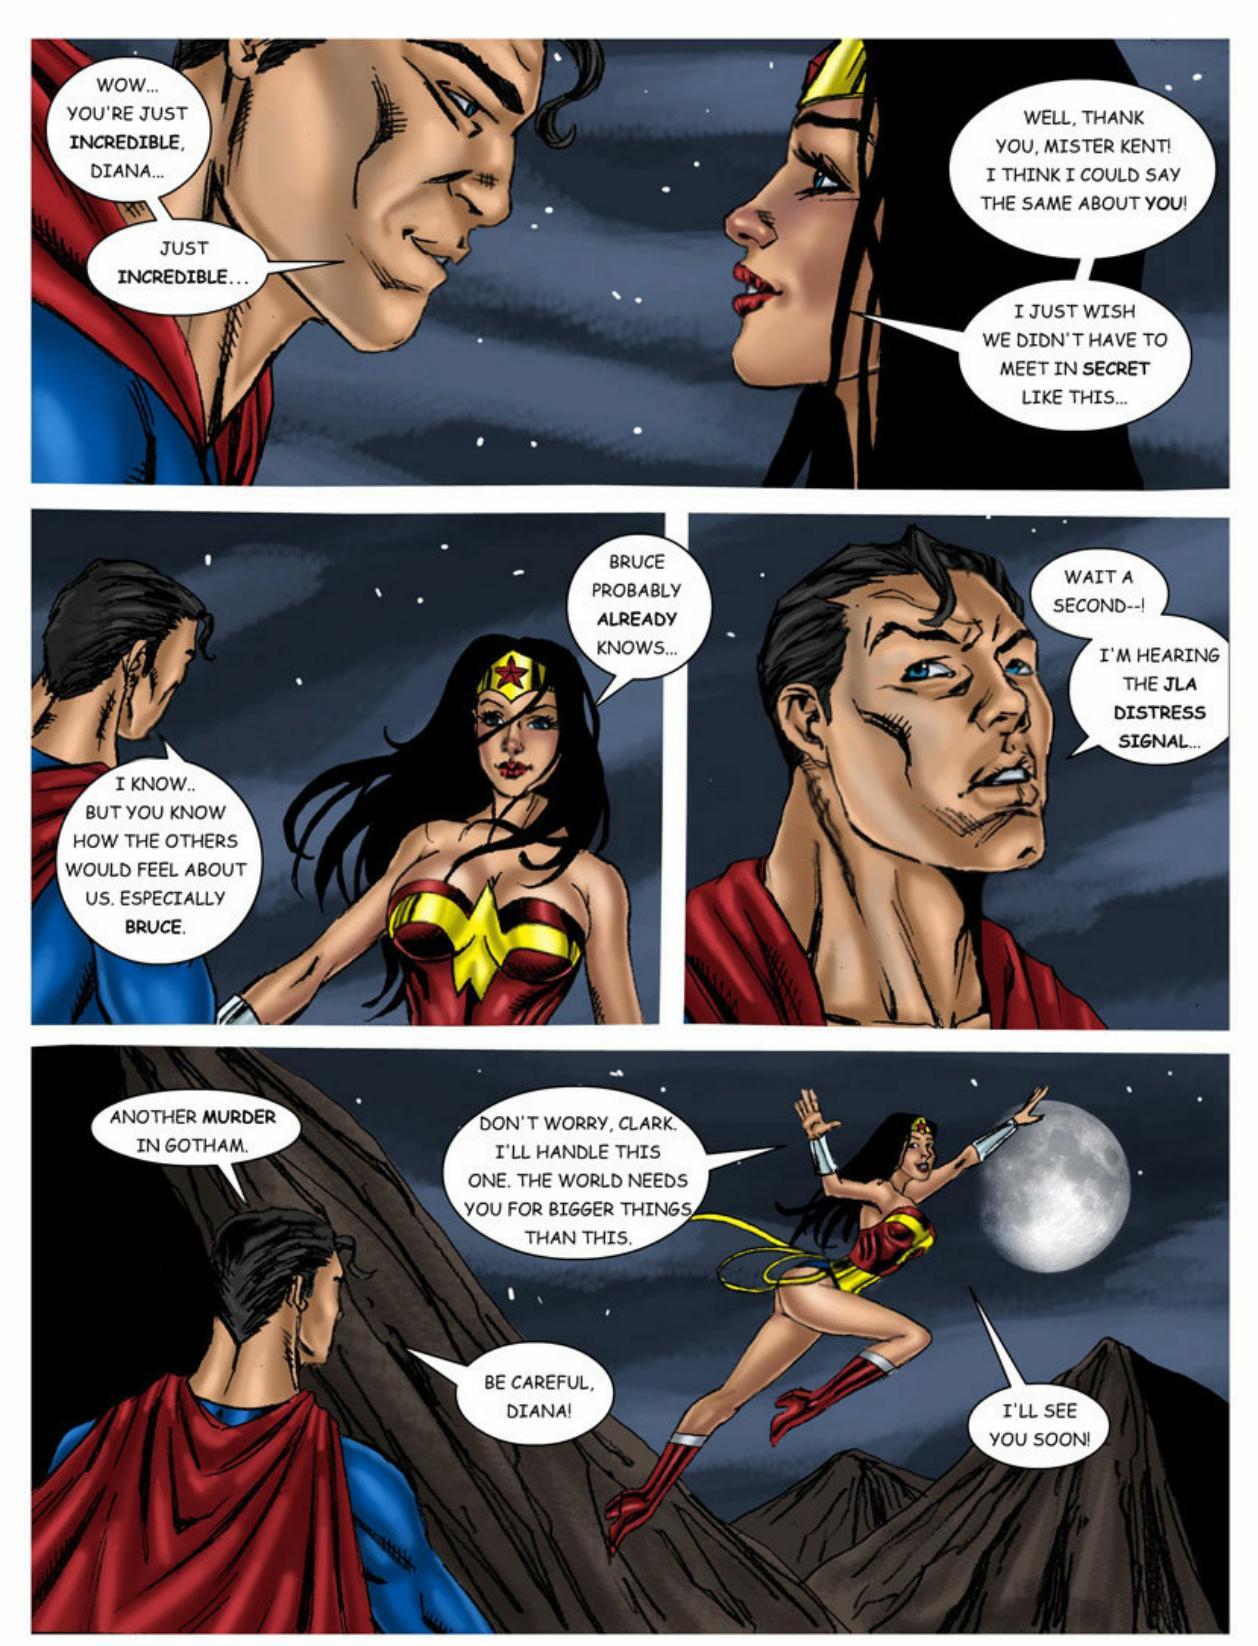 Sex Wonder Car - Wonder Woman vs Predator â€“ Part 1-3 free Cartoon Porn Comic - HD ...